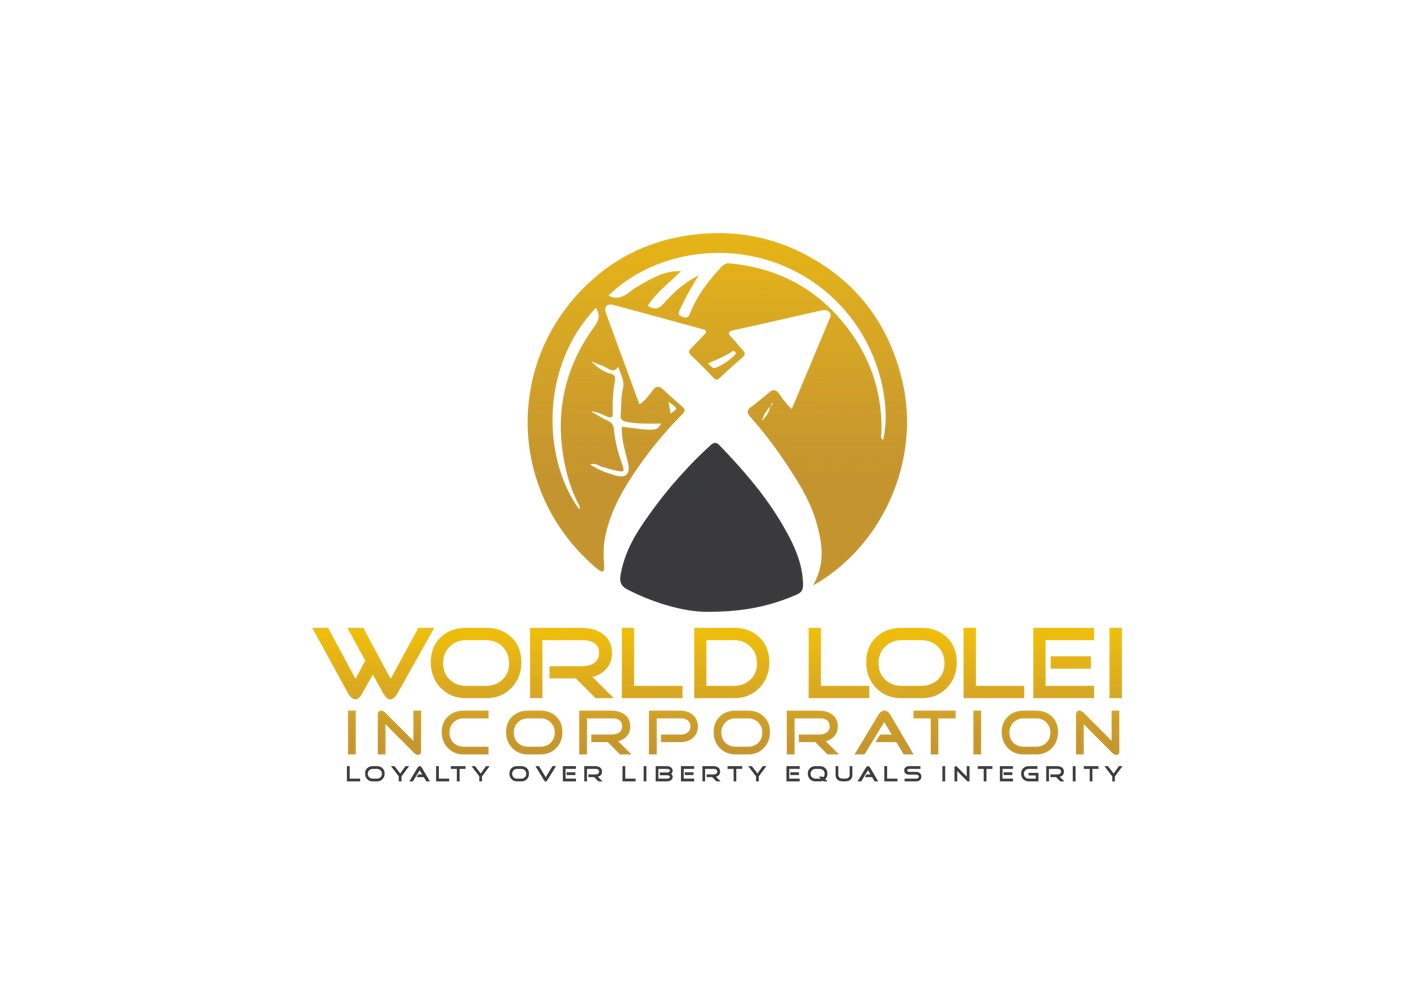 Worldlolei logo and join us 